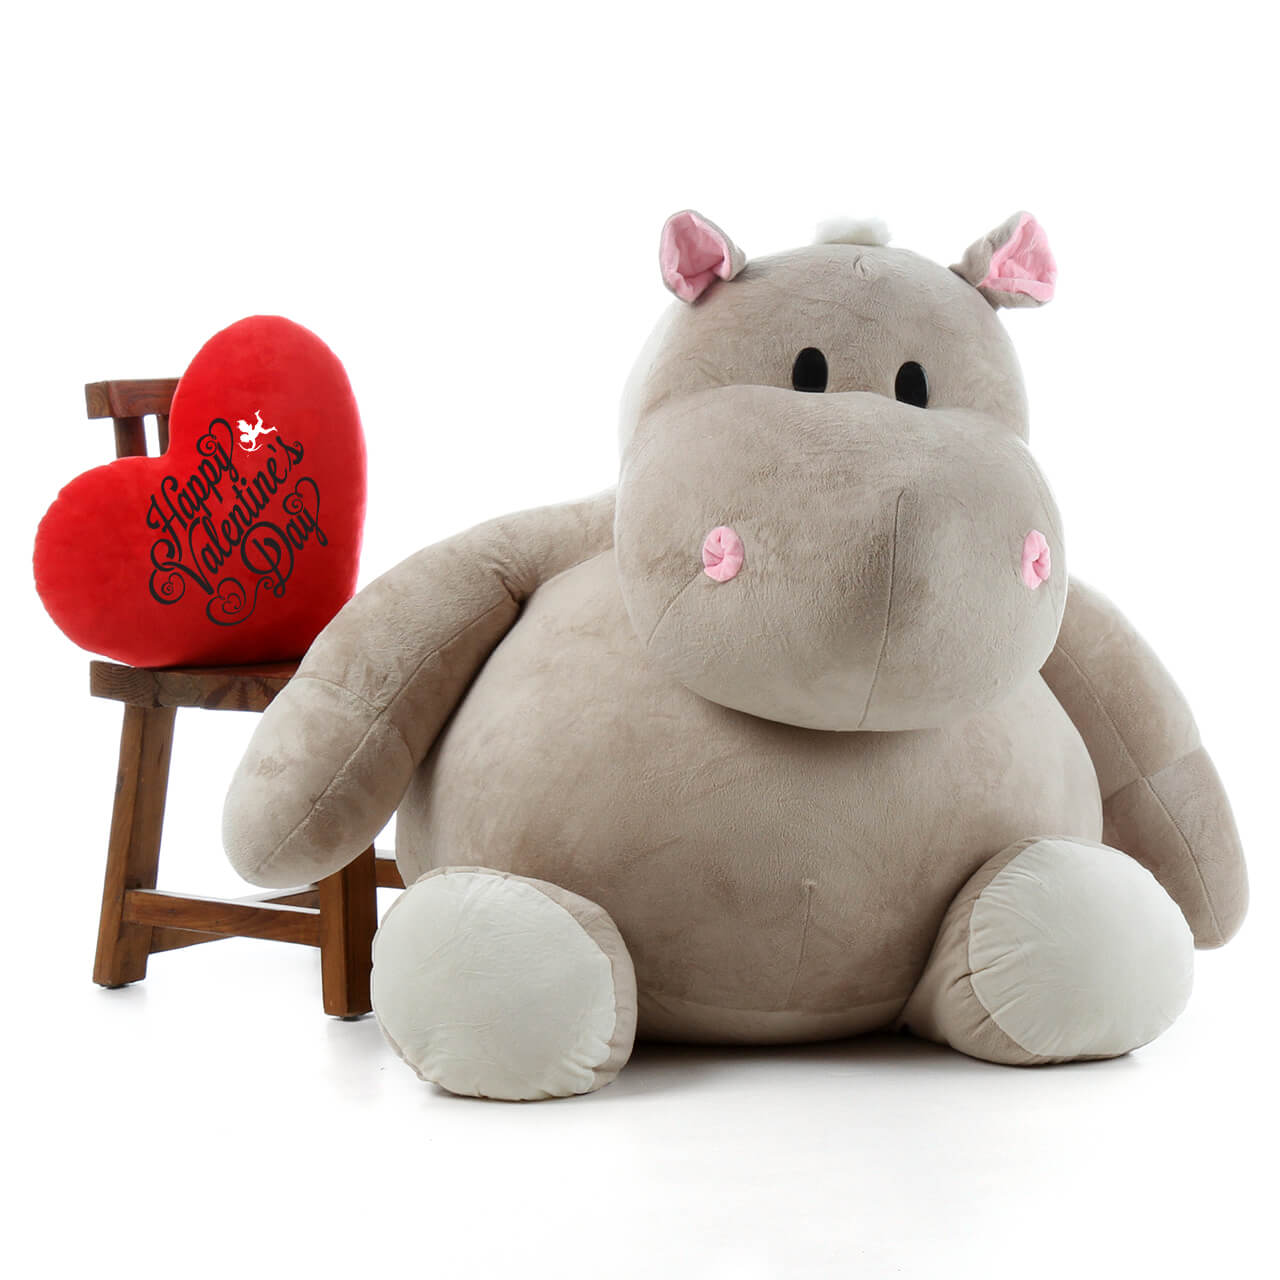 54-inch-giant-teddy-brand-giant-hippo-with-happy-valentine-s-day-heart.jpg